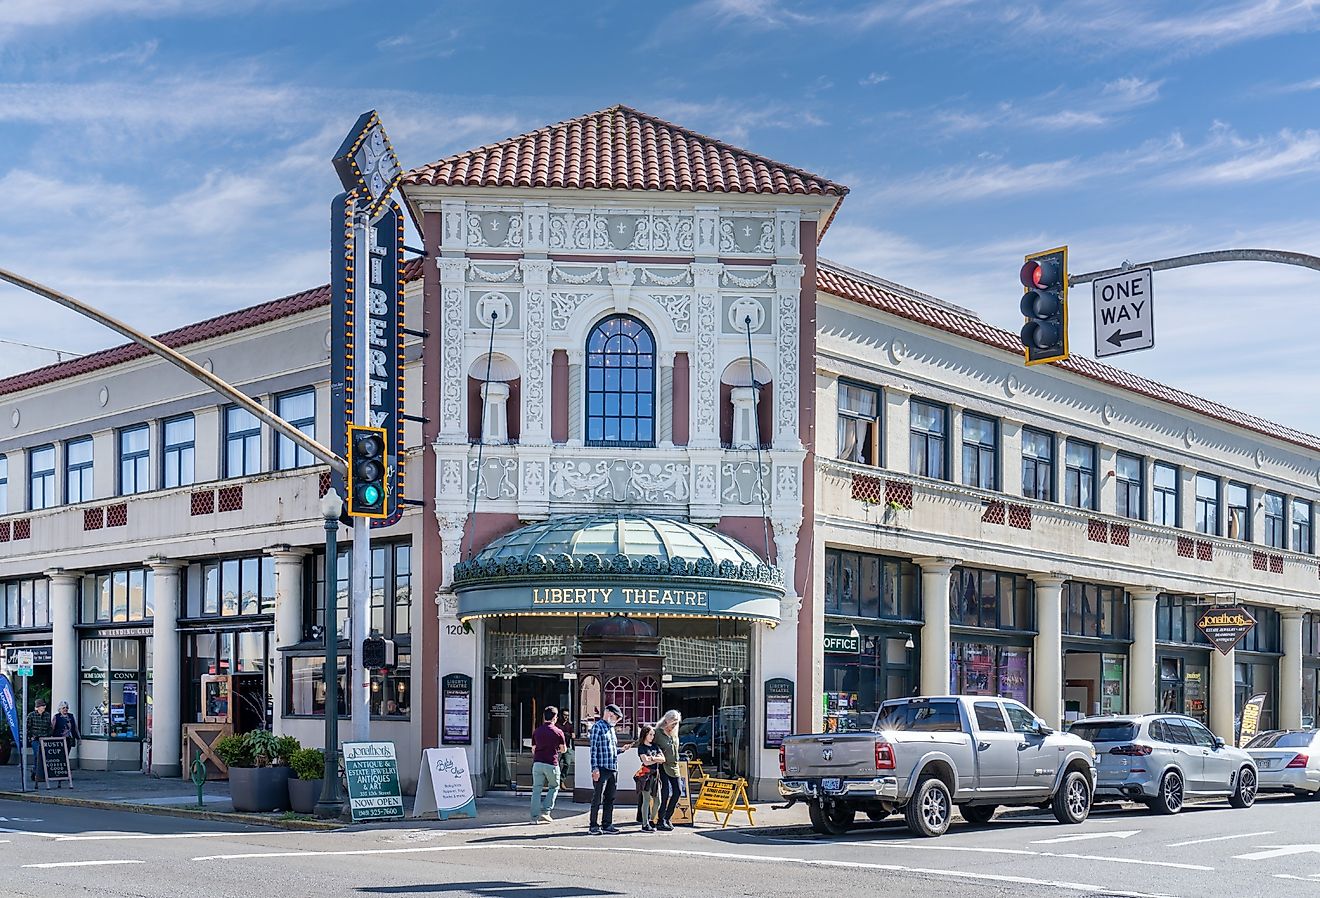 The Liberty Theatre in downtown Astoria, Oregon. Editorial credit: BZ Travel via Shutterstock.com